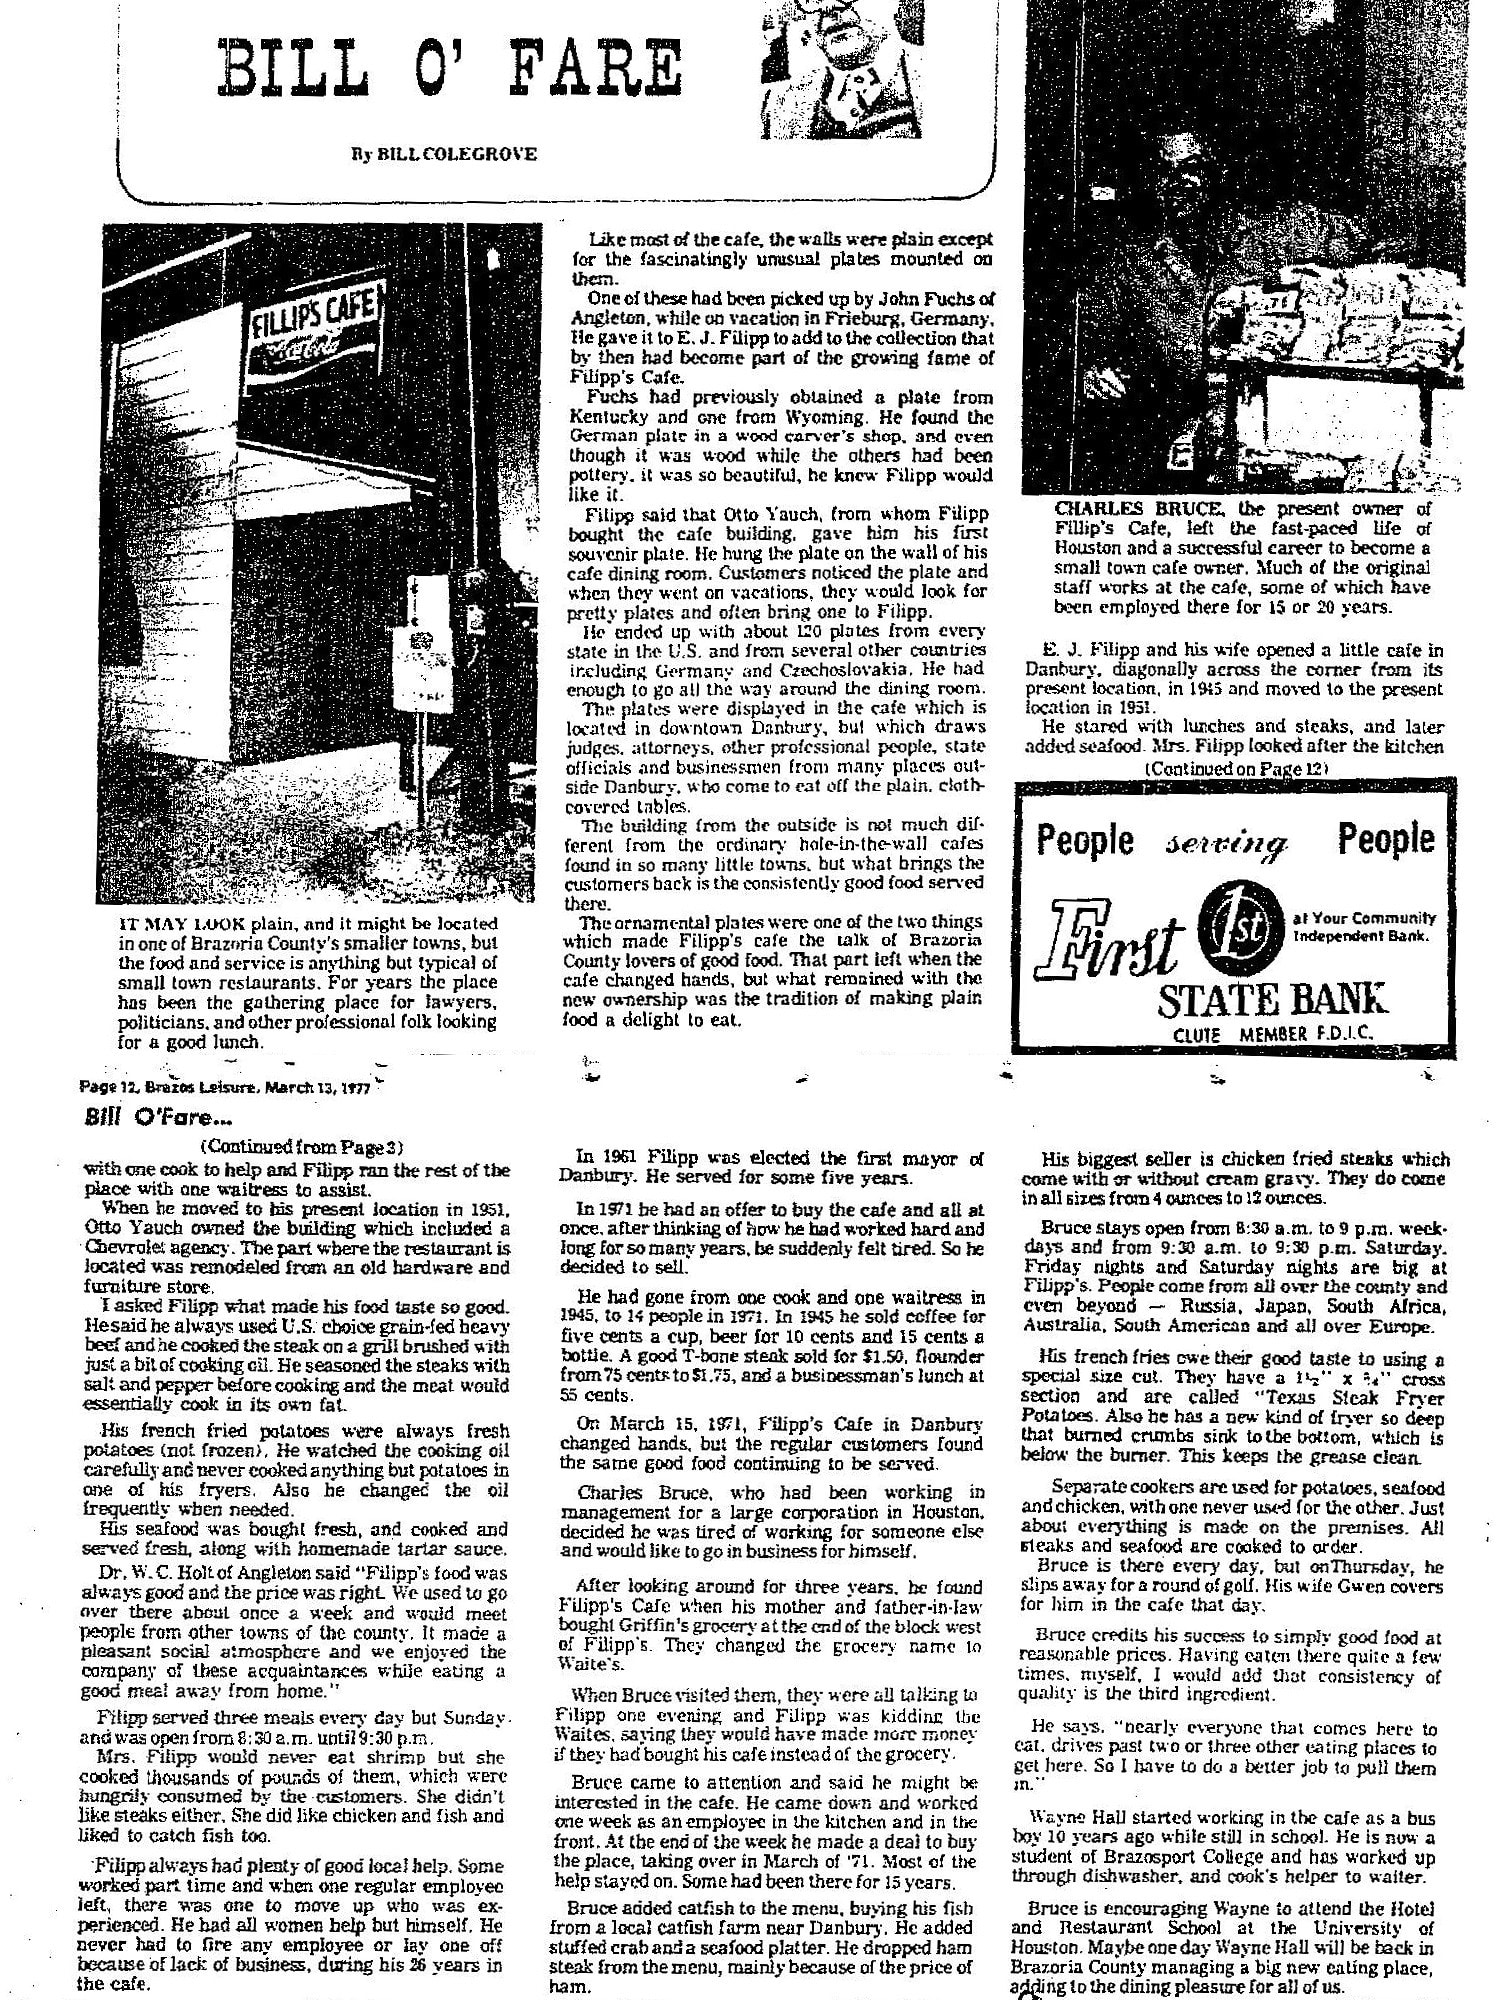 Brazosport Facts Mar 13 1977 p 50 - Filipp's Cafe